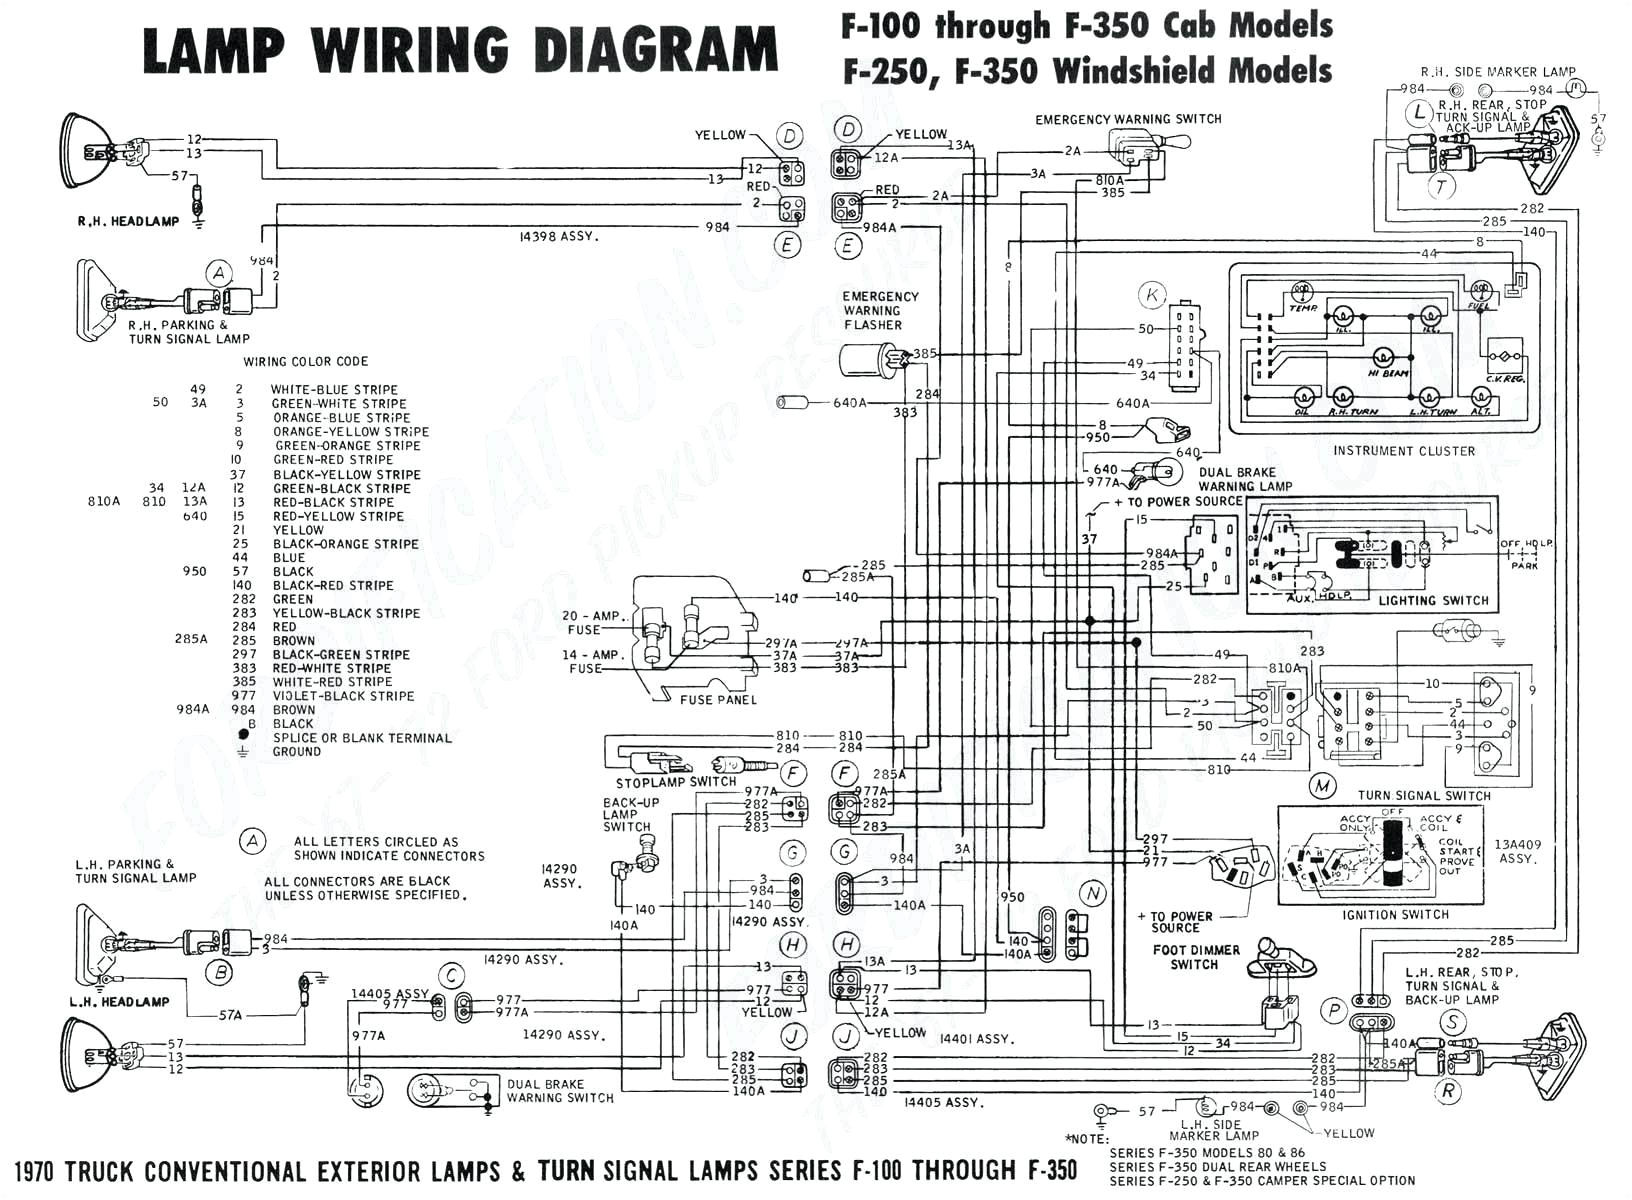 2005 Dodge Ram Stereo Wiring Diagram 2005 Dodge Ram Stereo Wiring Pics Wiring Diagram Sample